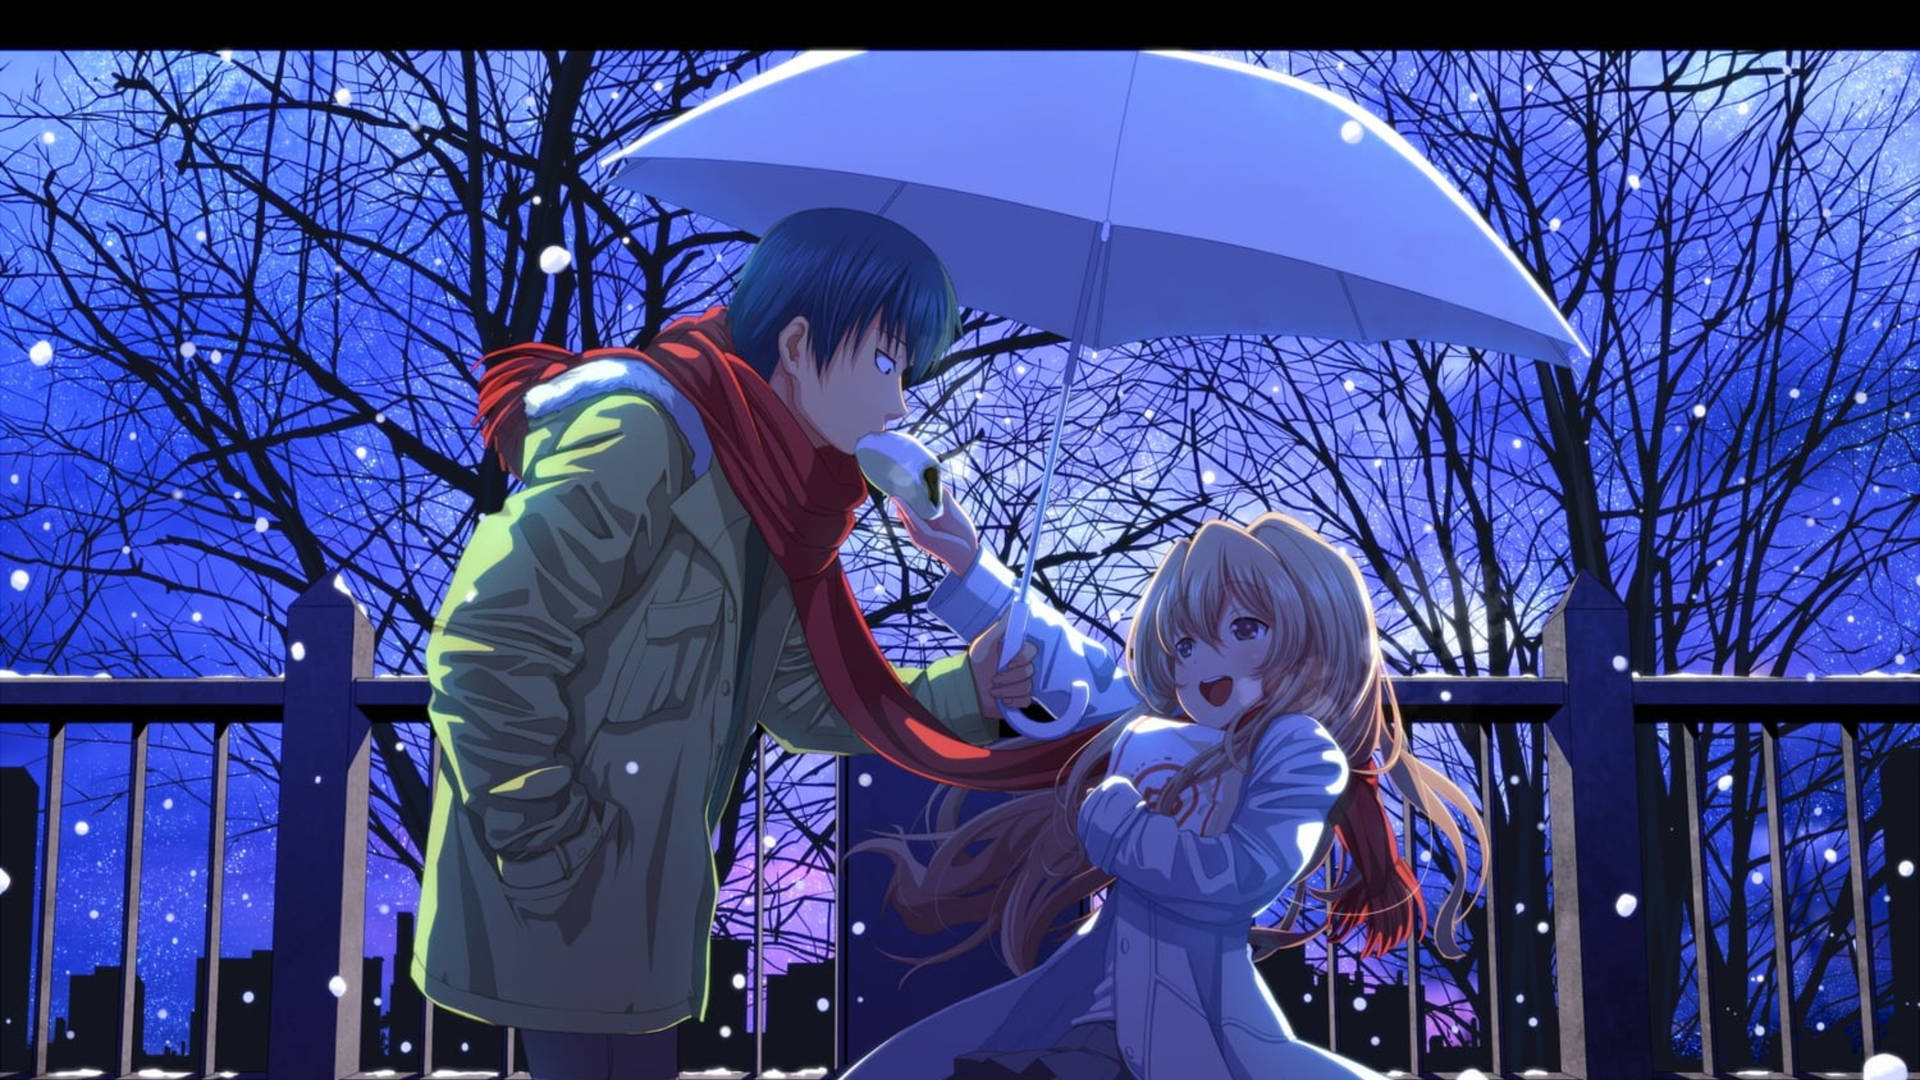 Cute Anime Couple Winter Walk